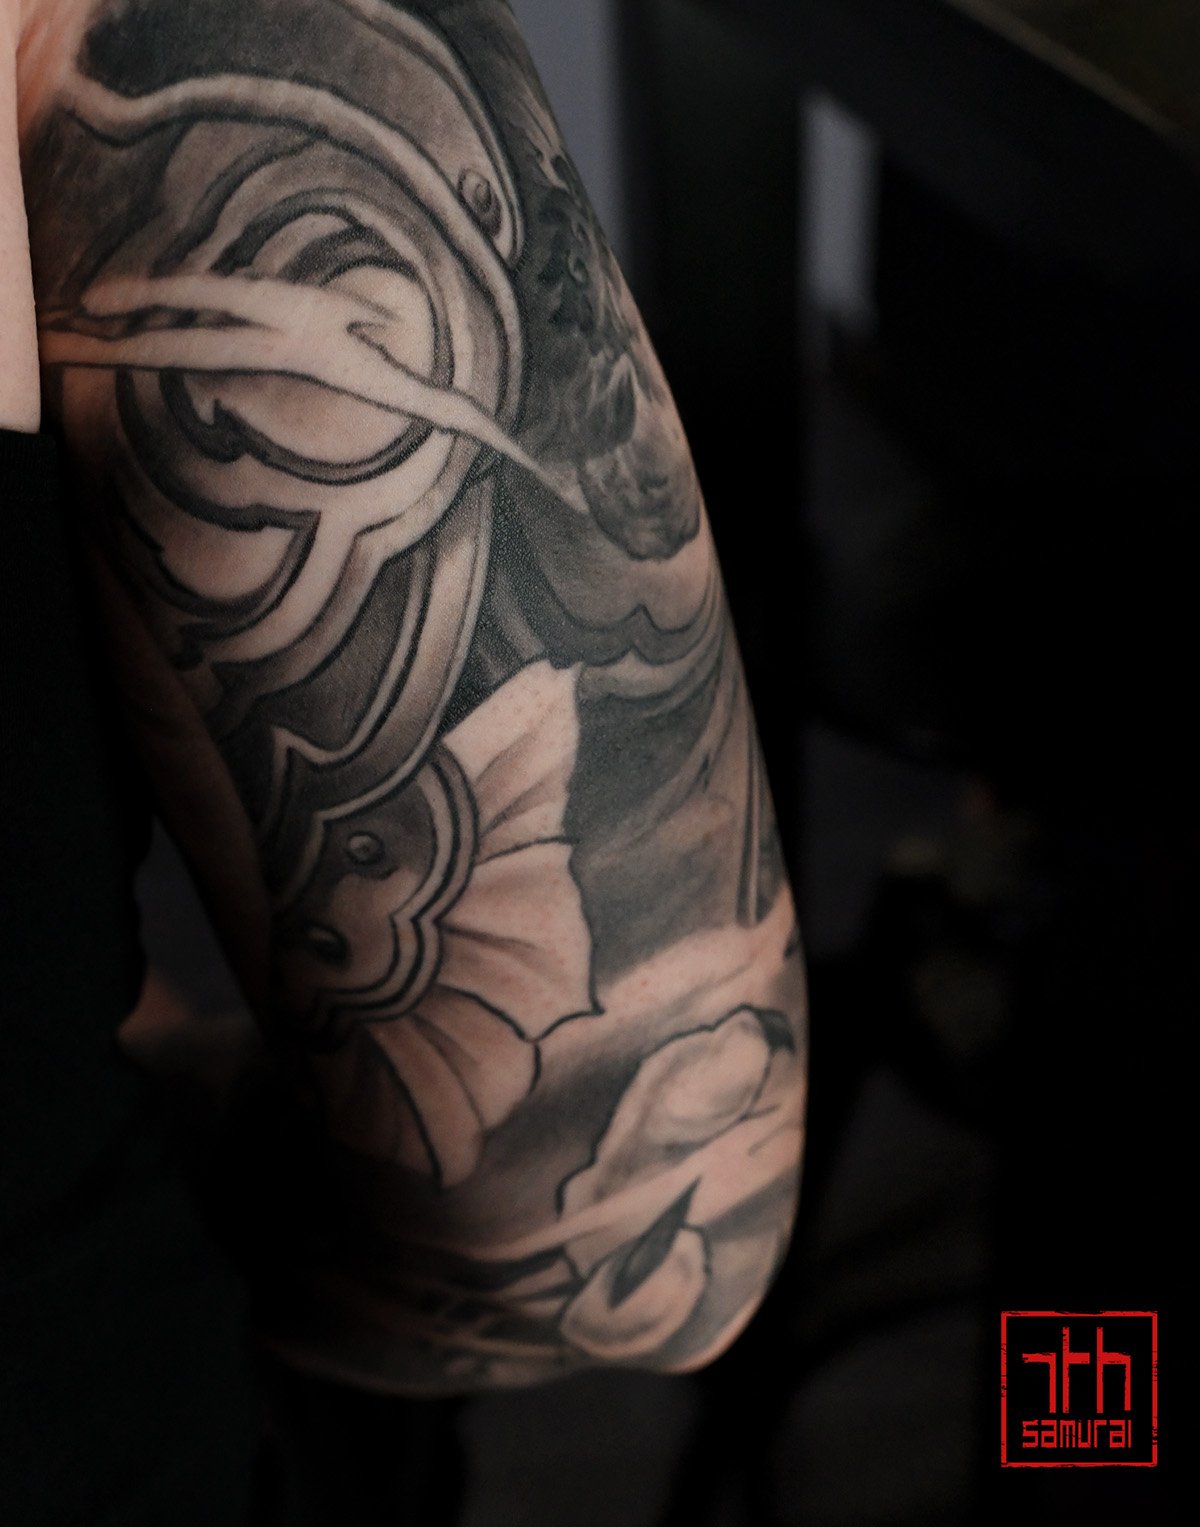 Asian zodiacs warrior armor Men's neo japanese asian astrology arm sleeve tattoo  asian artist: Kai 7th Samurai. YEG Edmonton, Alberta, Canada 2023 best 2024 